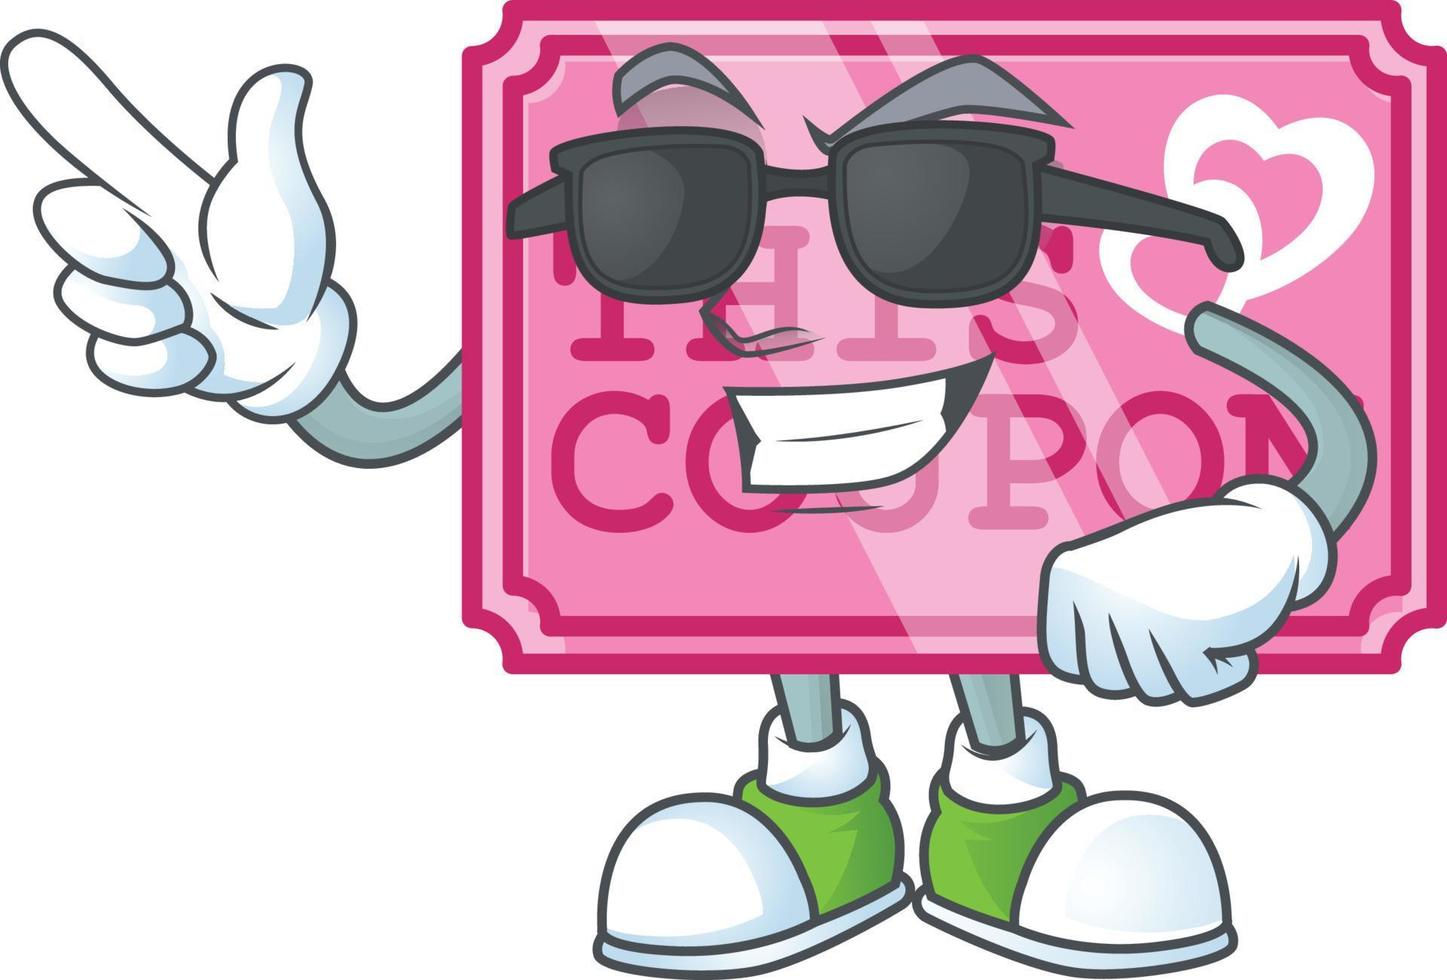 roze liefde coupon tekenfilm karakter stijl vector